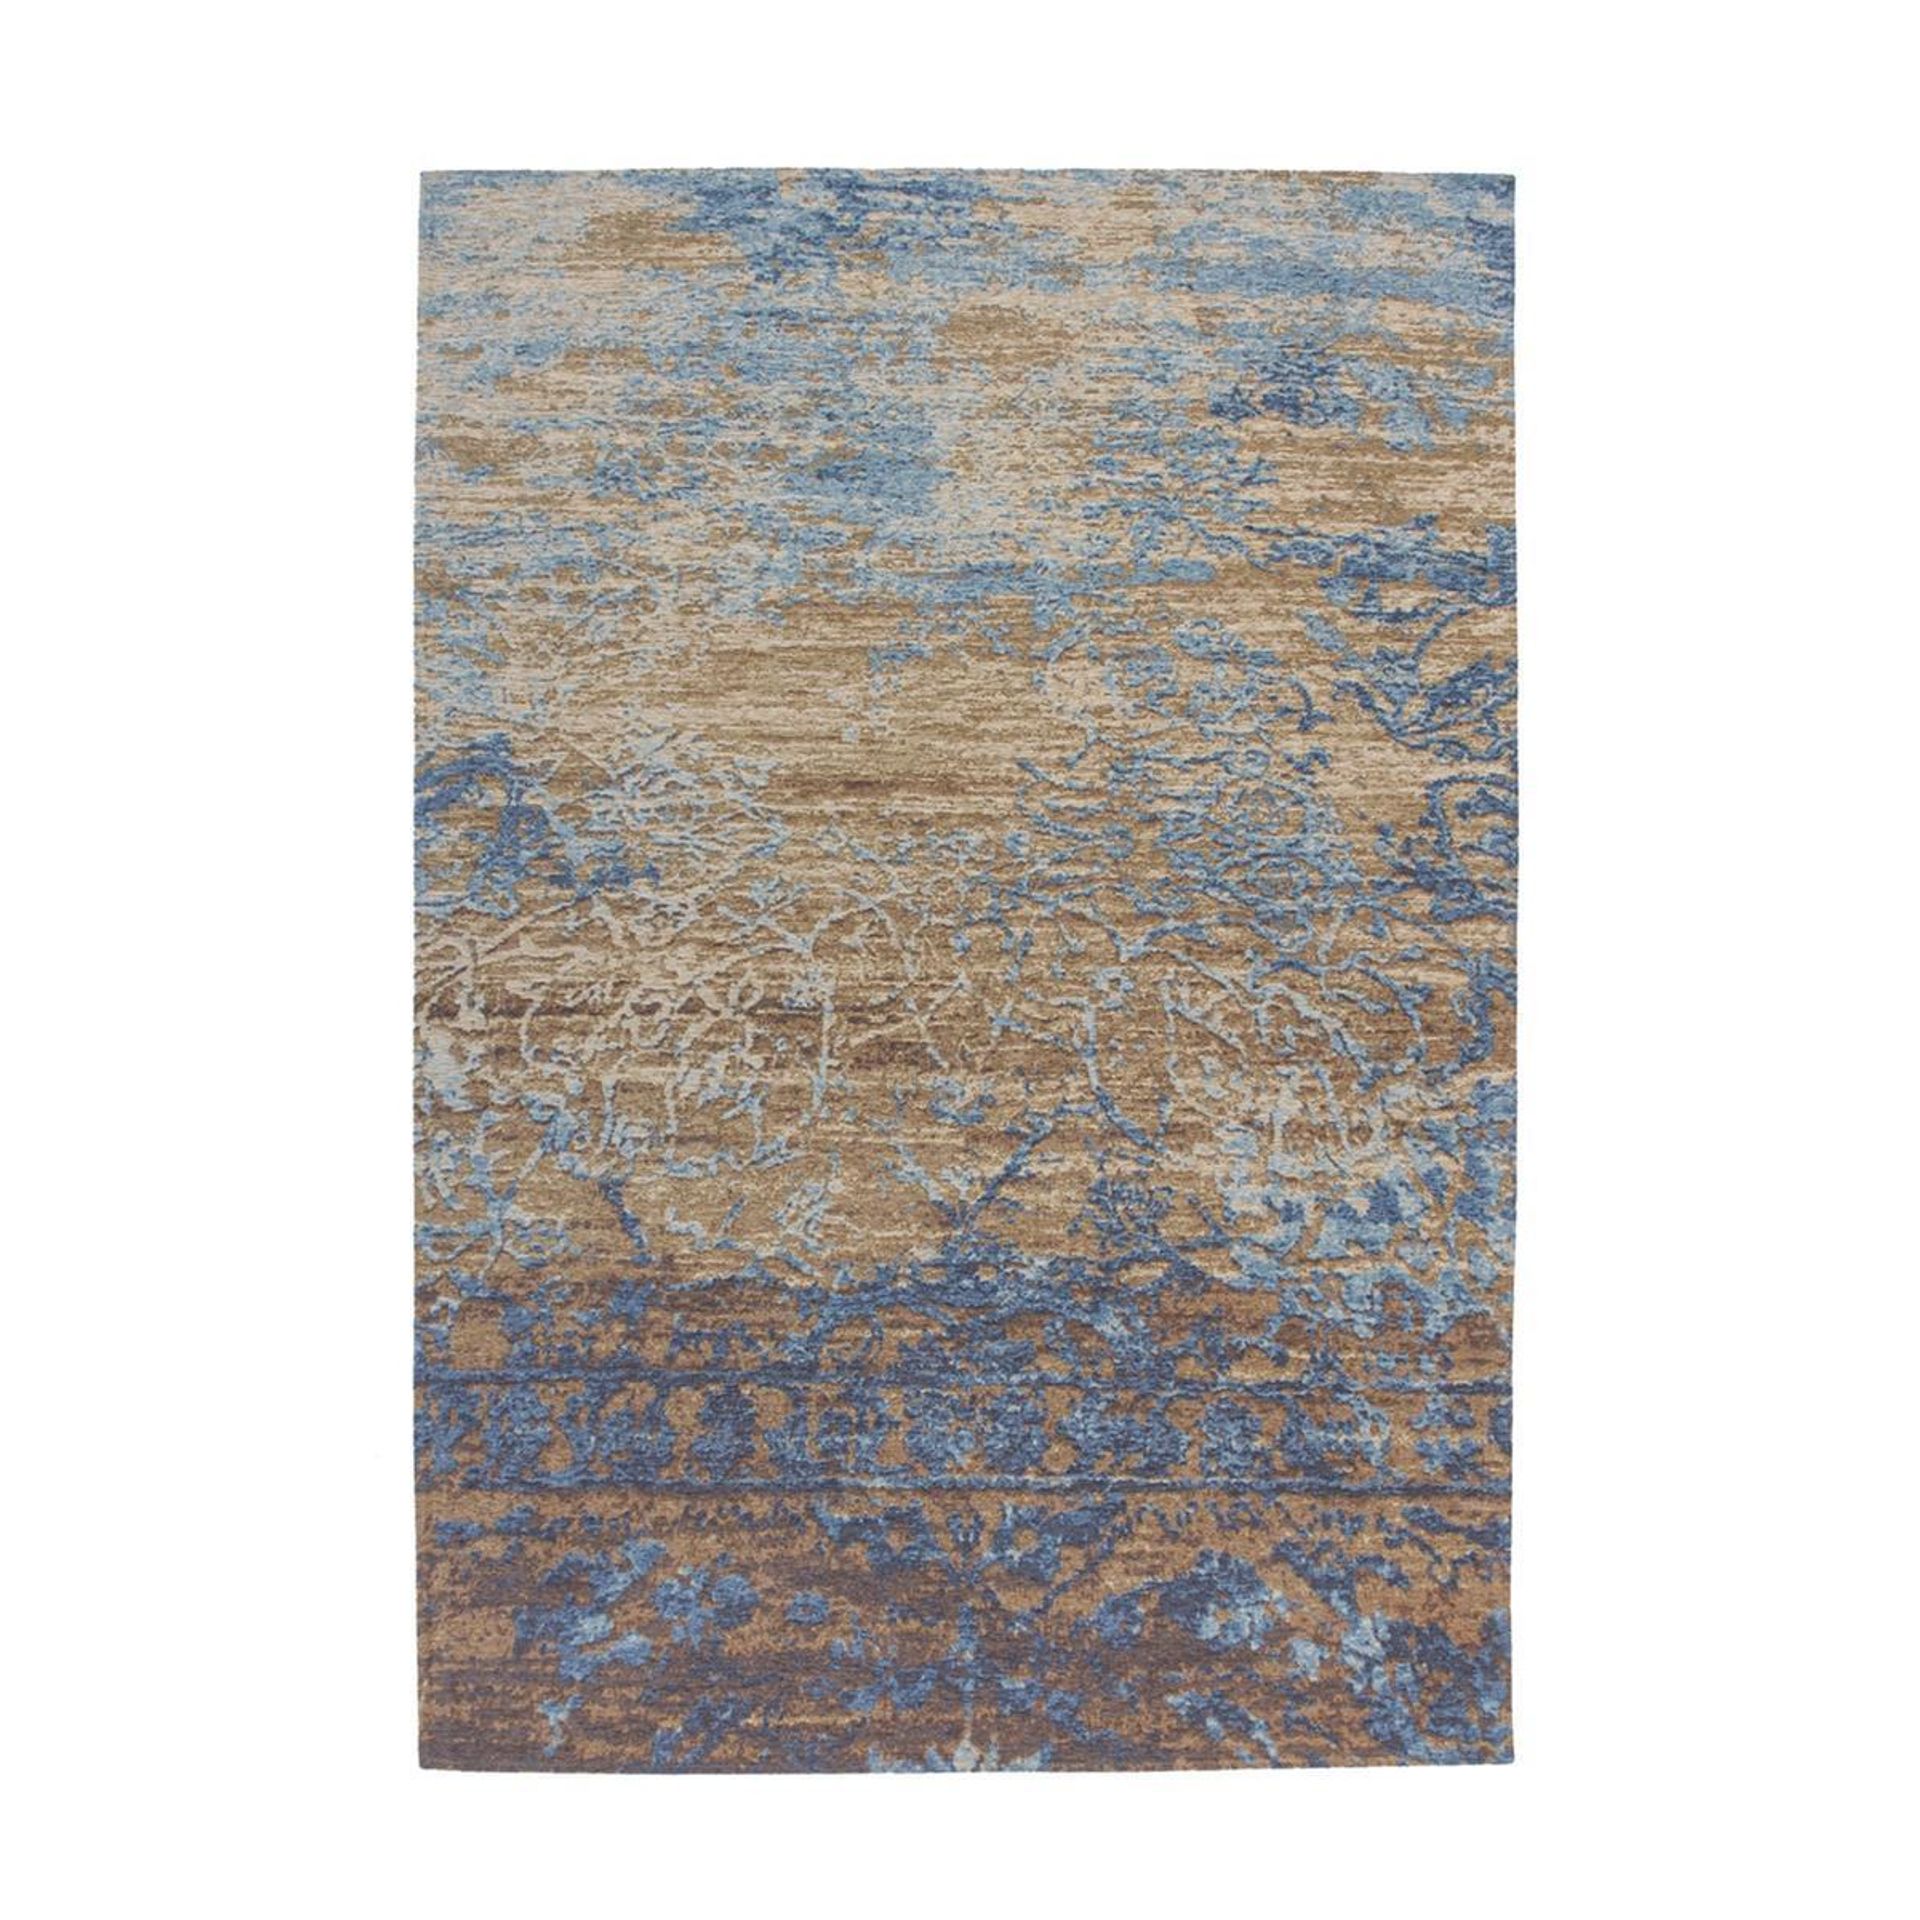 Teppich Blaze 600 Blau / Beige 115 cm x 170 cm